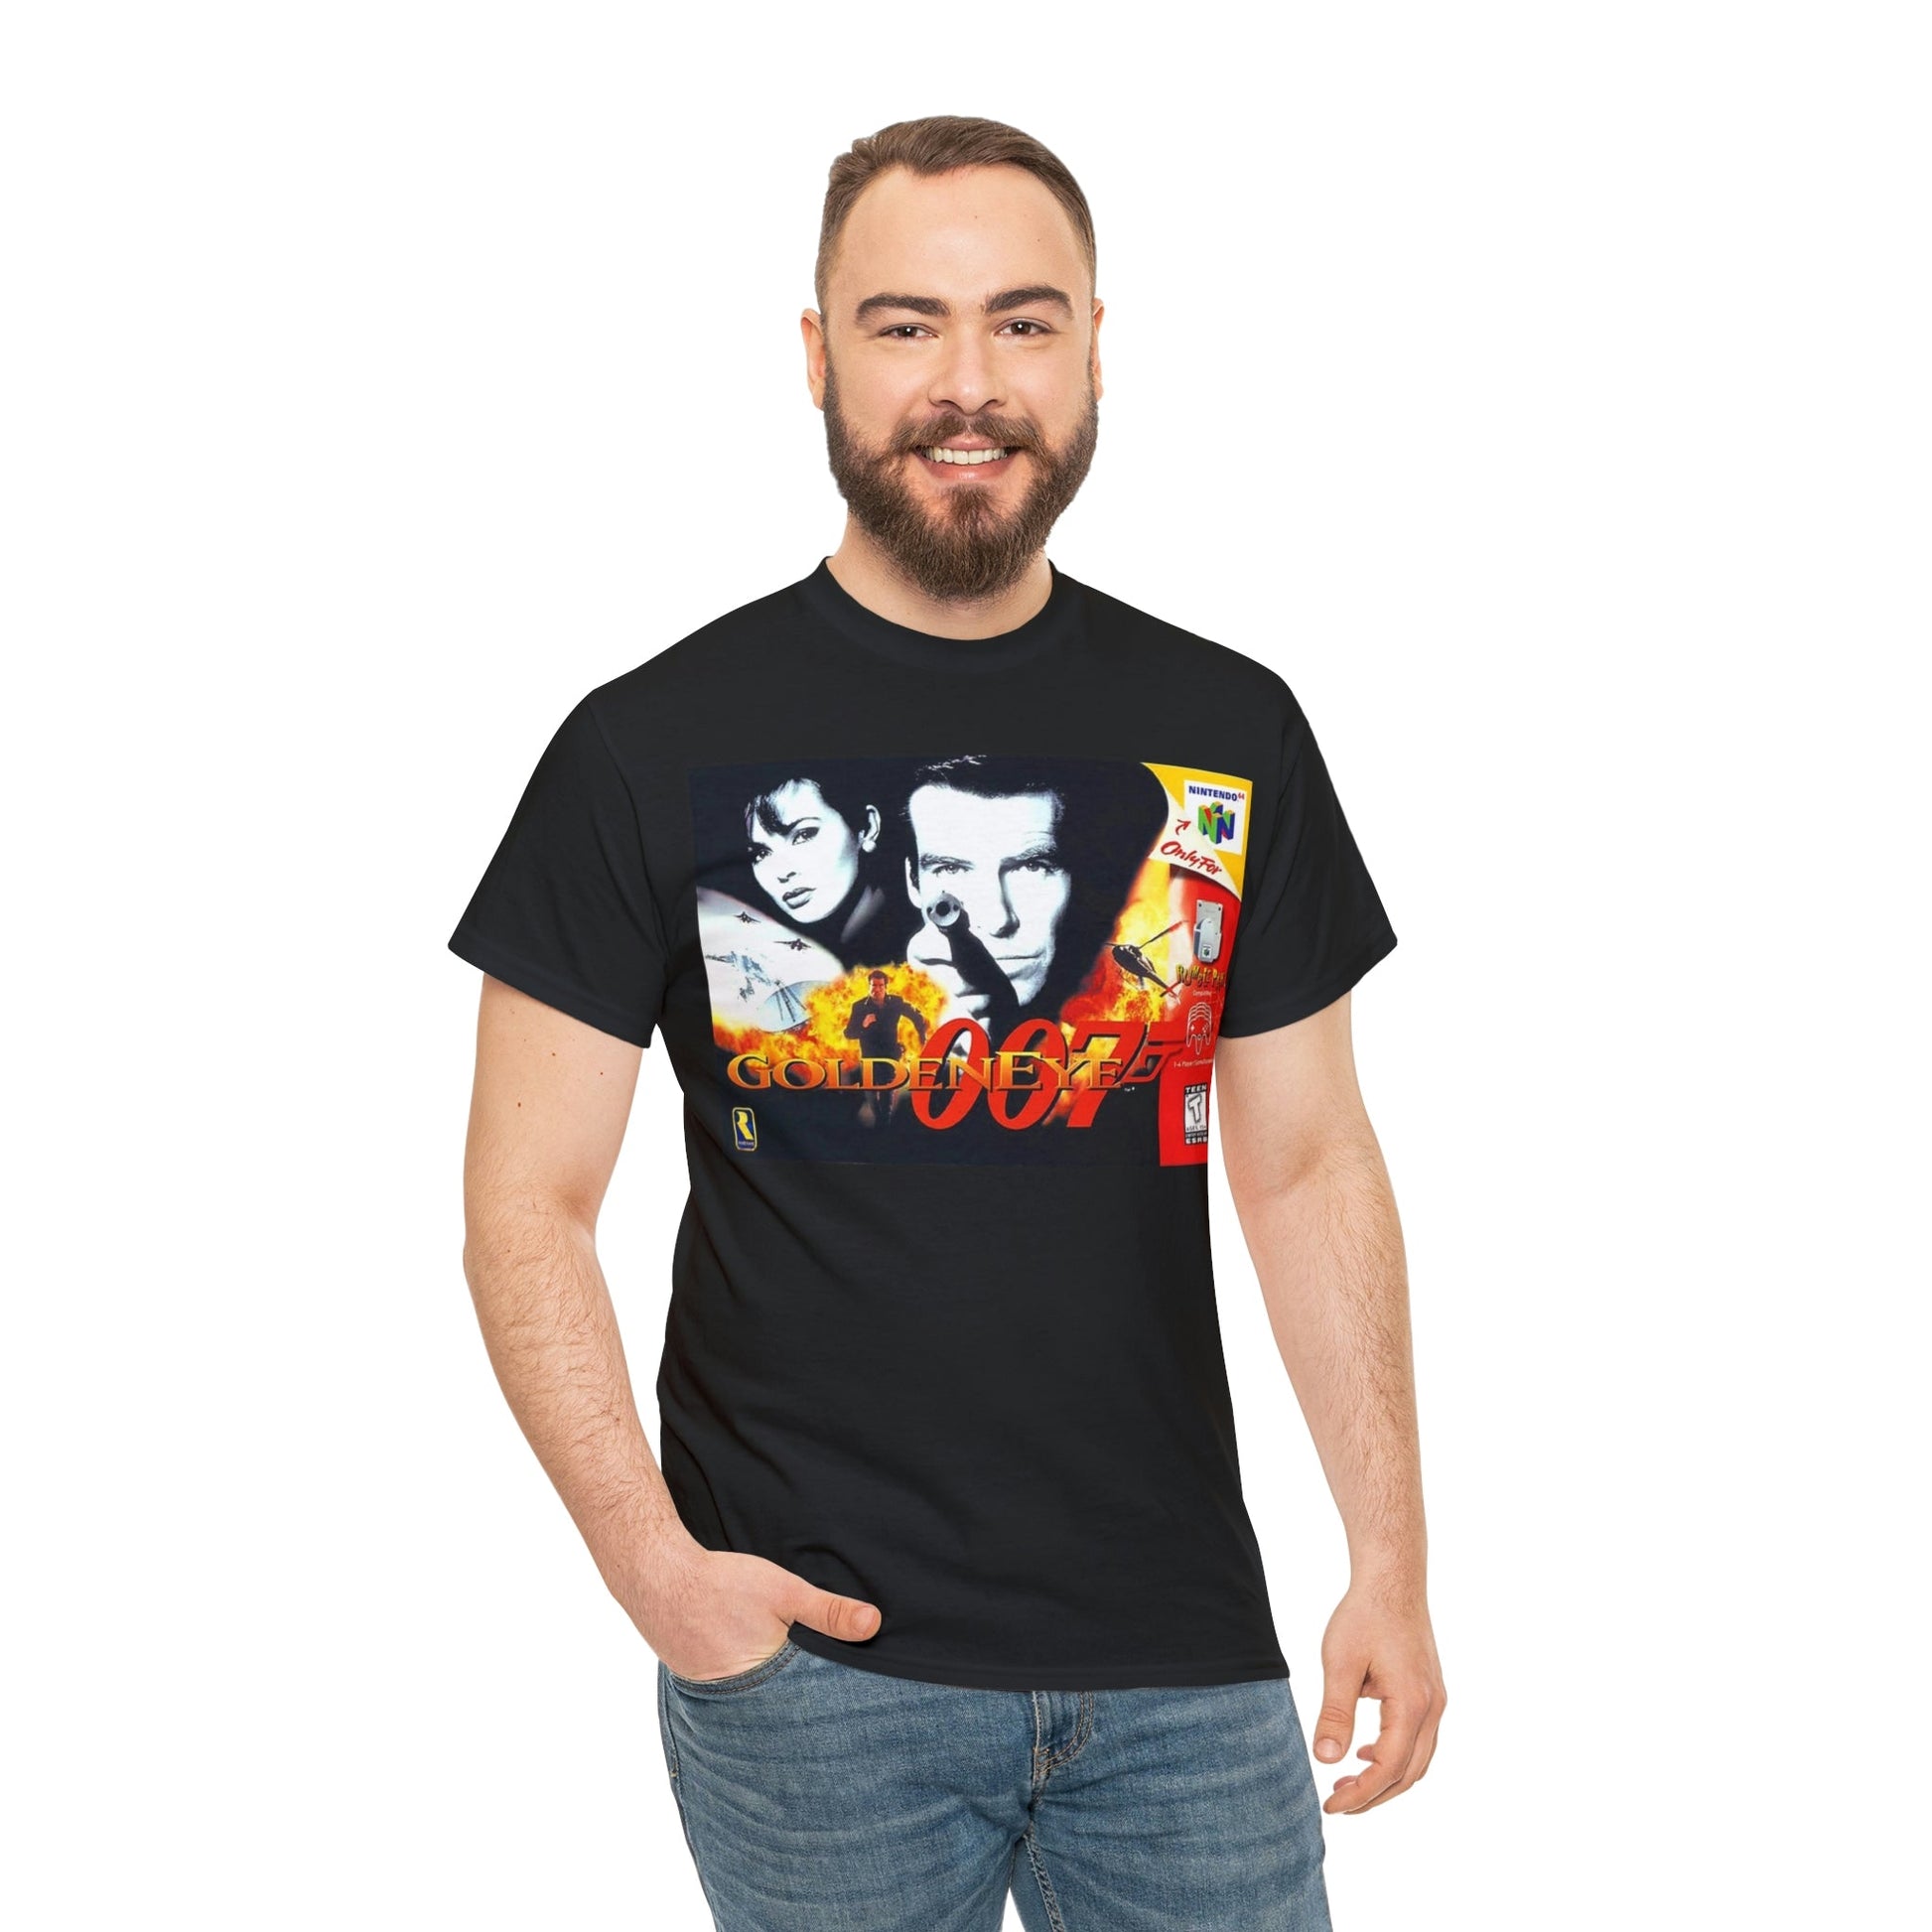 Goldeneye 007 N64 Video Game Box Art T-Shirt - RetroTeeShop